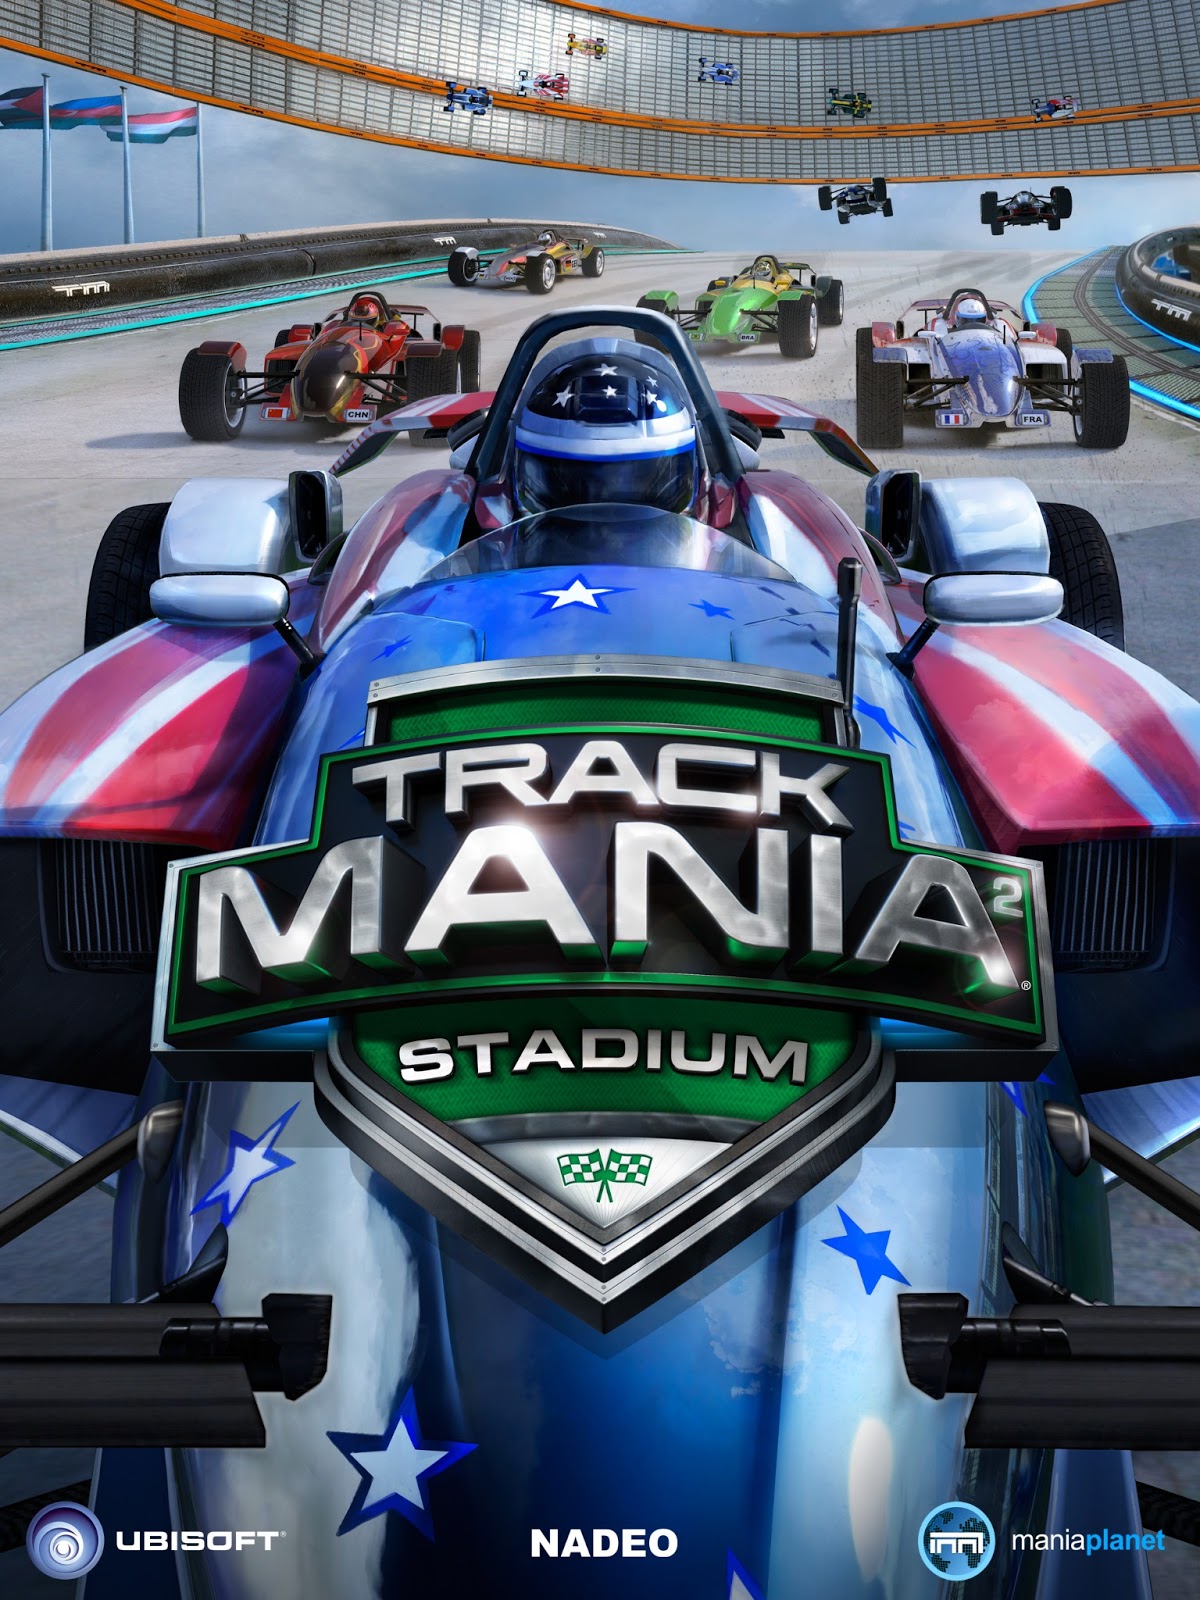 trackmania 2 stadium car skins